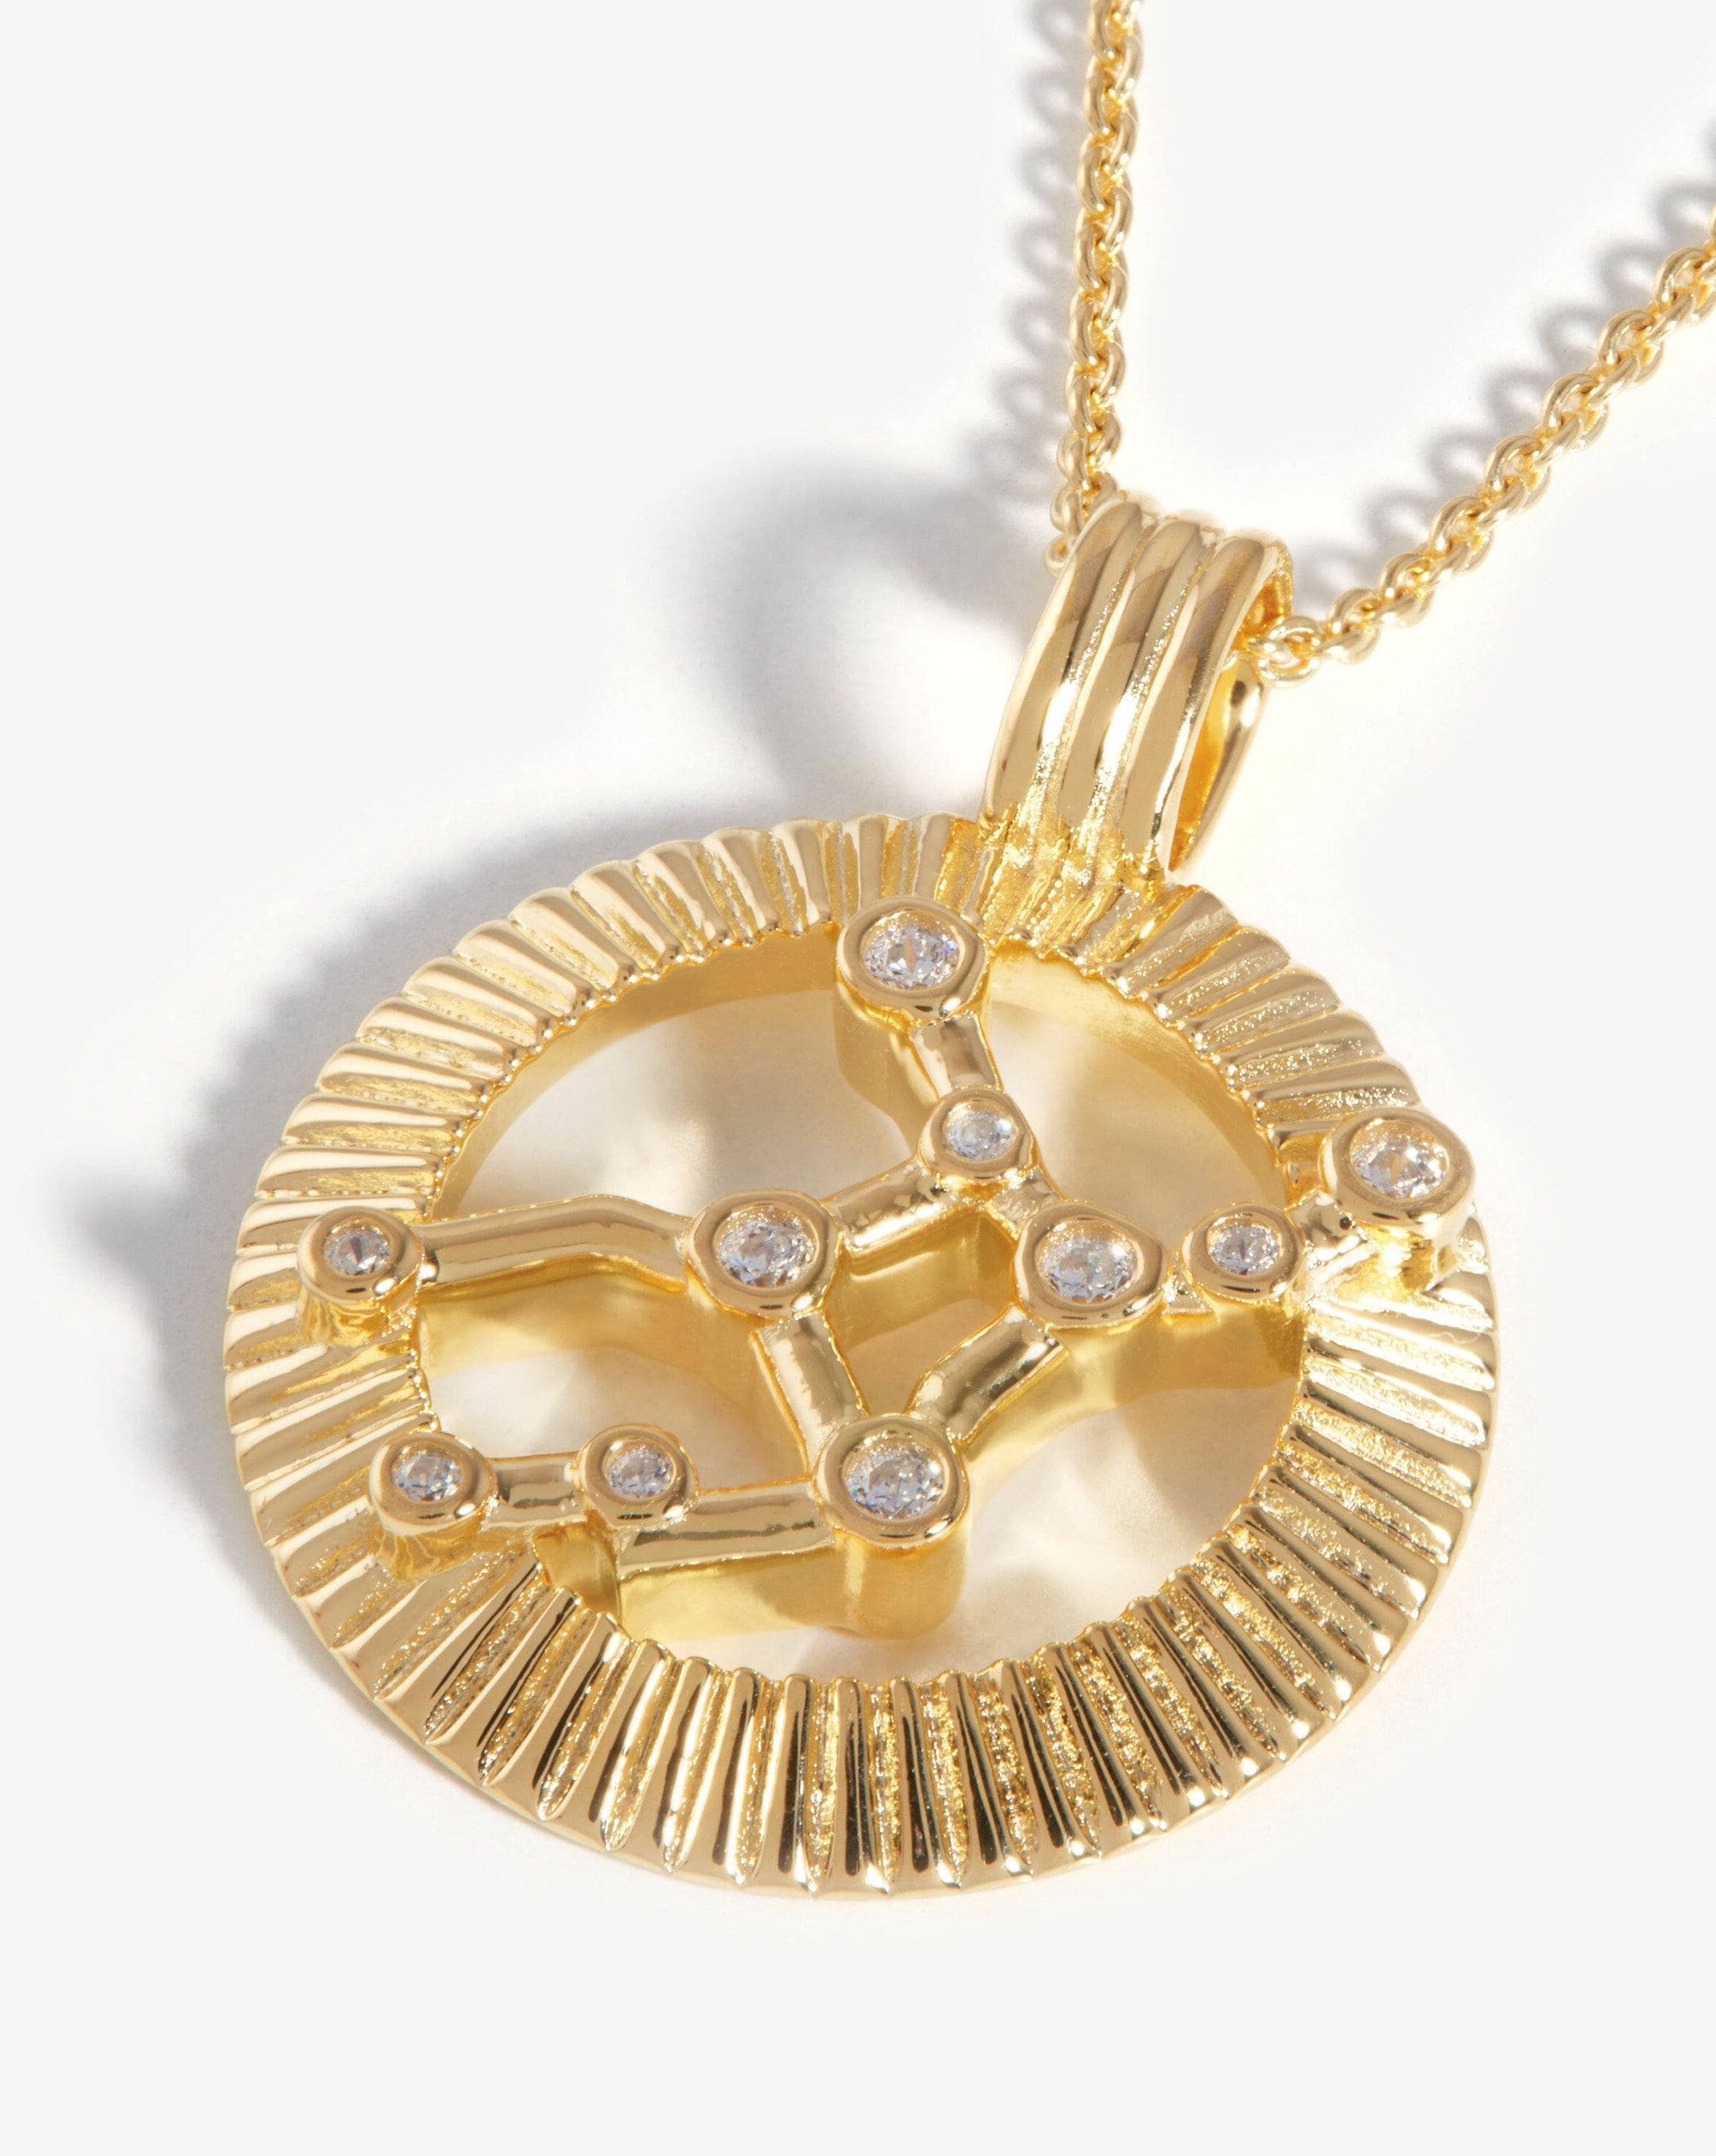 Zodiac Constellation Pendant Necklace - Virgo | 18ct Gold Plated Vermeil/Virgo Necklaces Missoma 